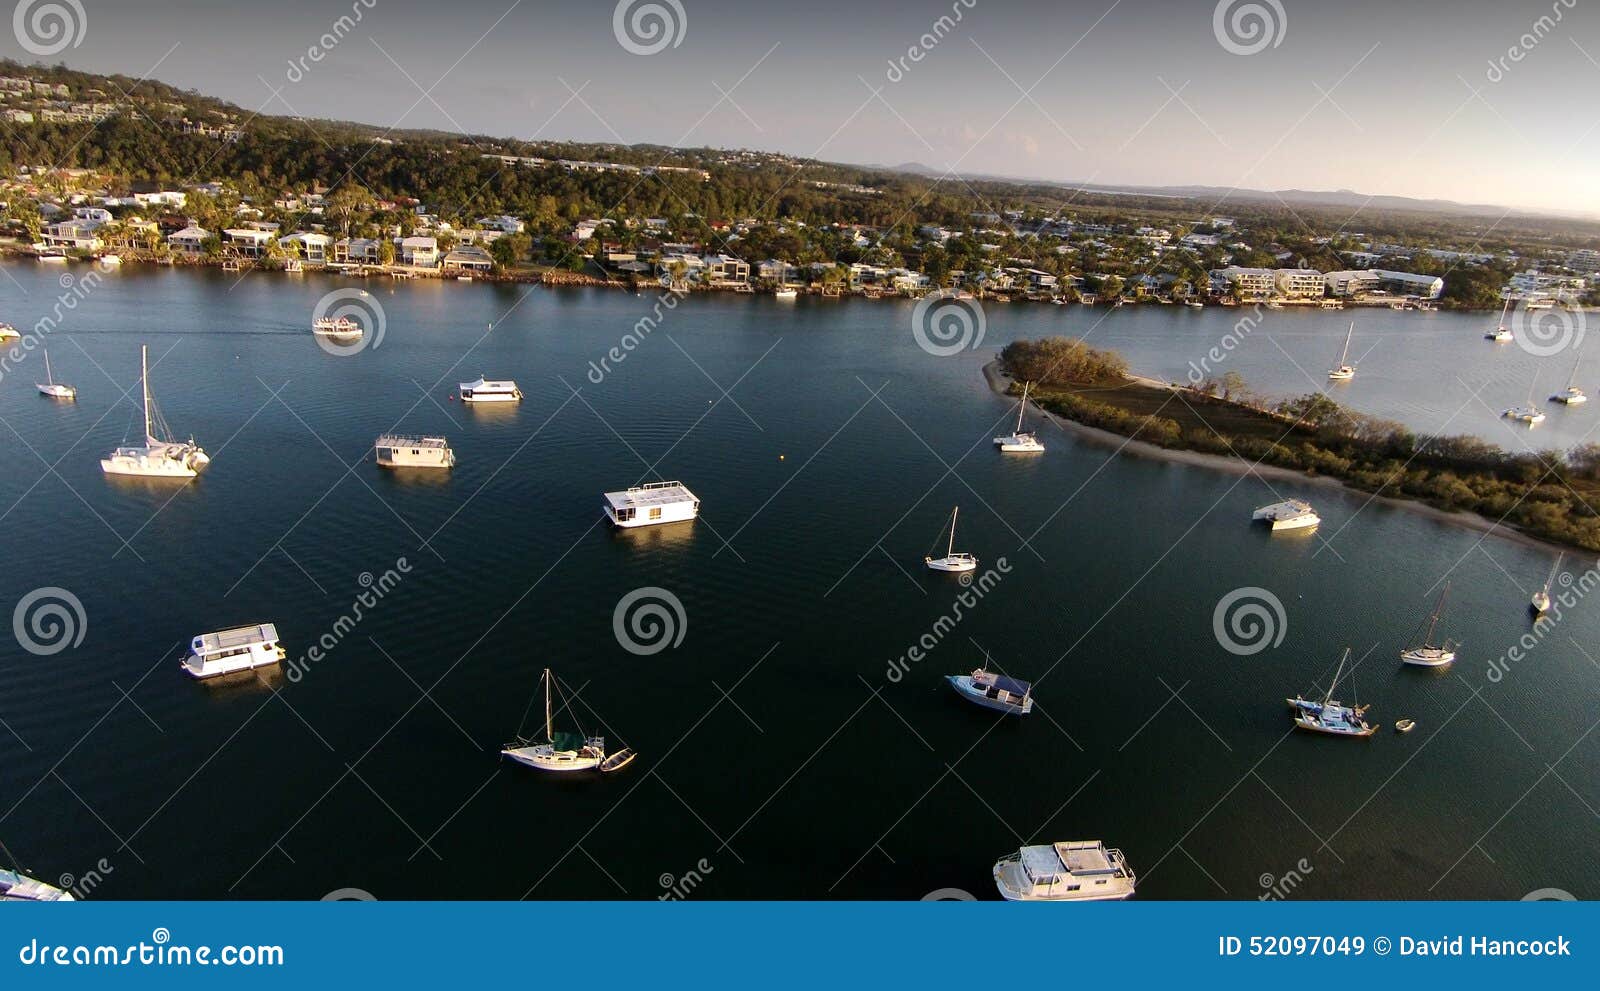 aerial picture image of noosa boat moorings